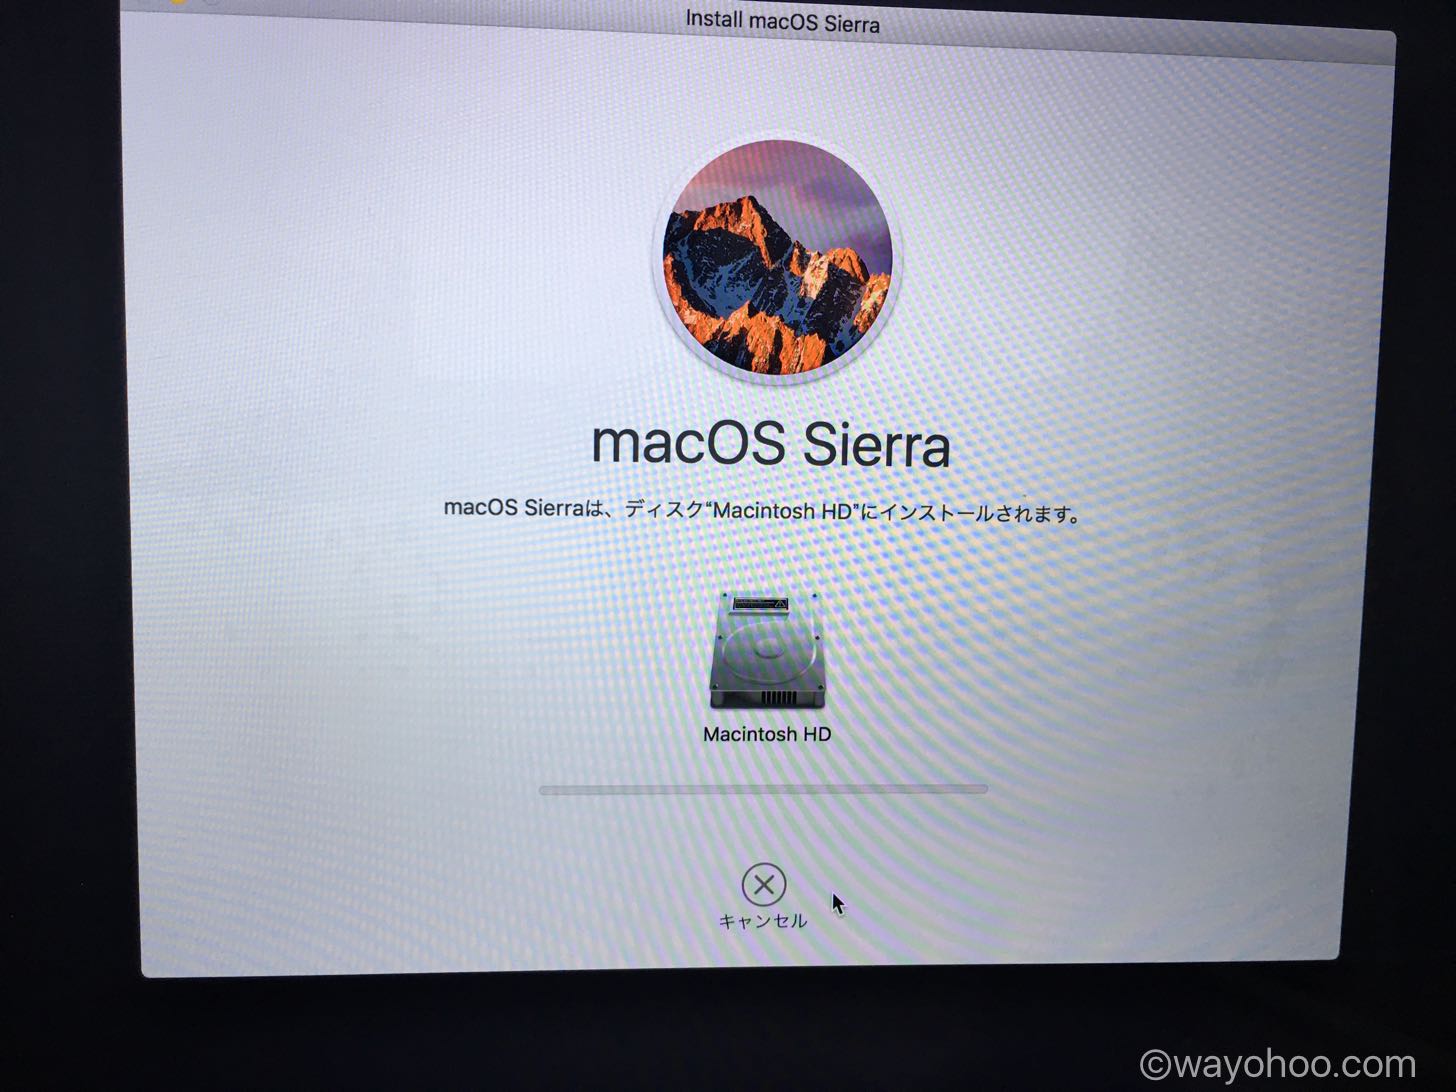 macOS Sierraのクリーンインストールが開始されました。